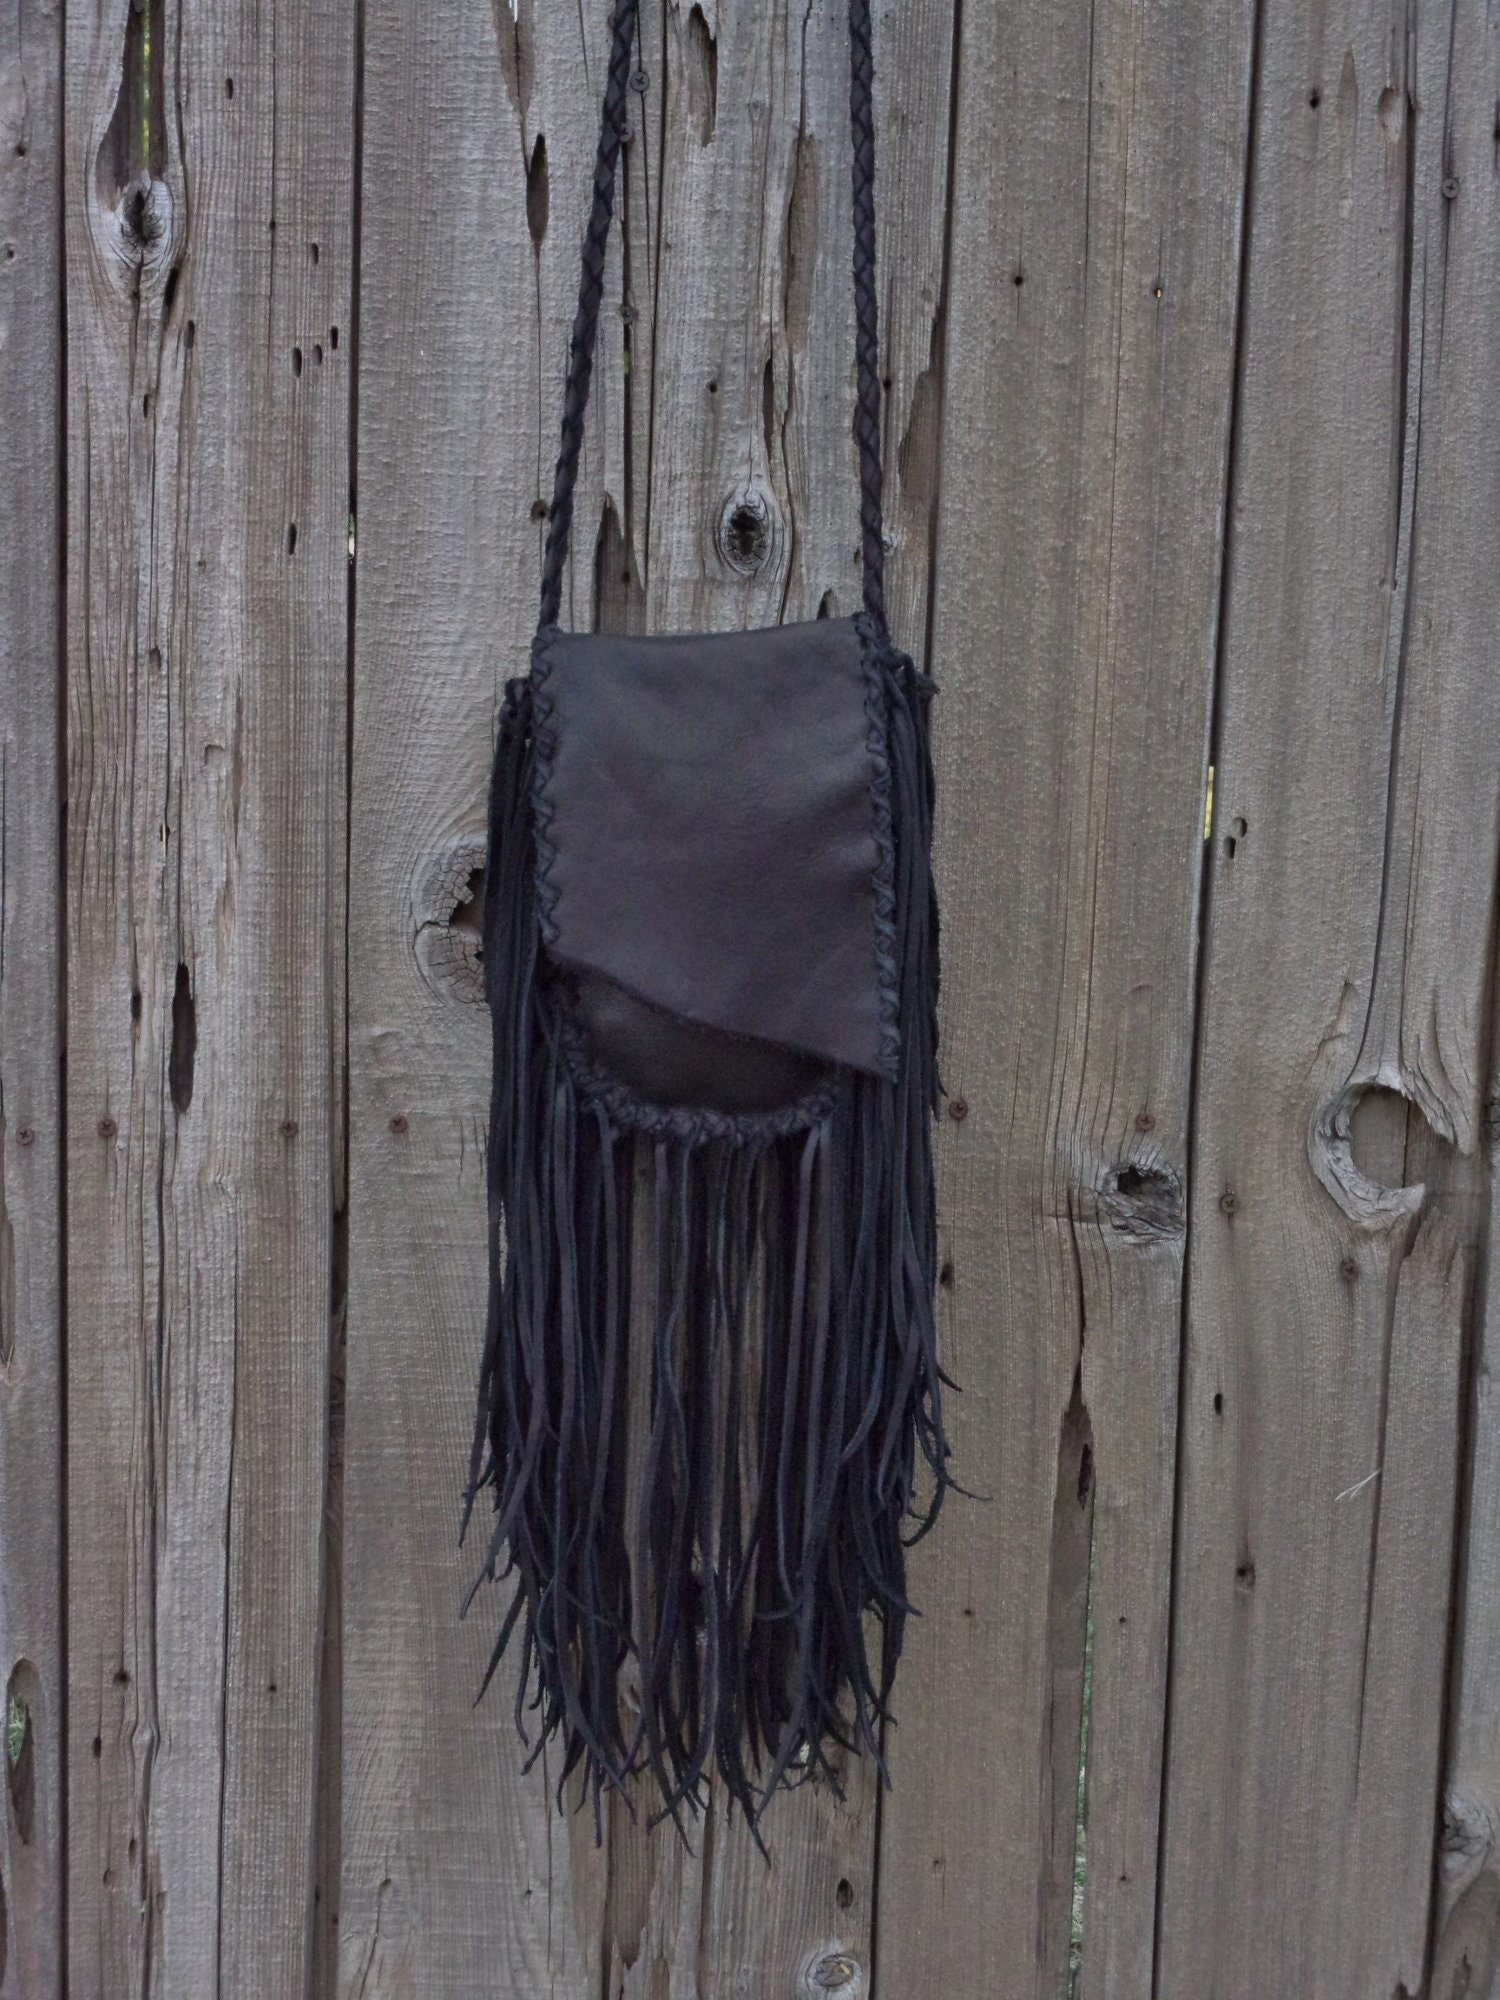 Black Crossbody Bag - Faux leather - High Quality Fabric – Sante Grace